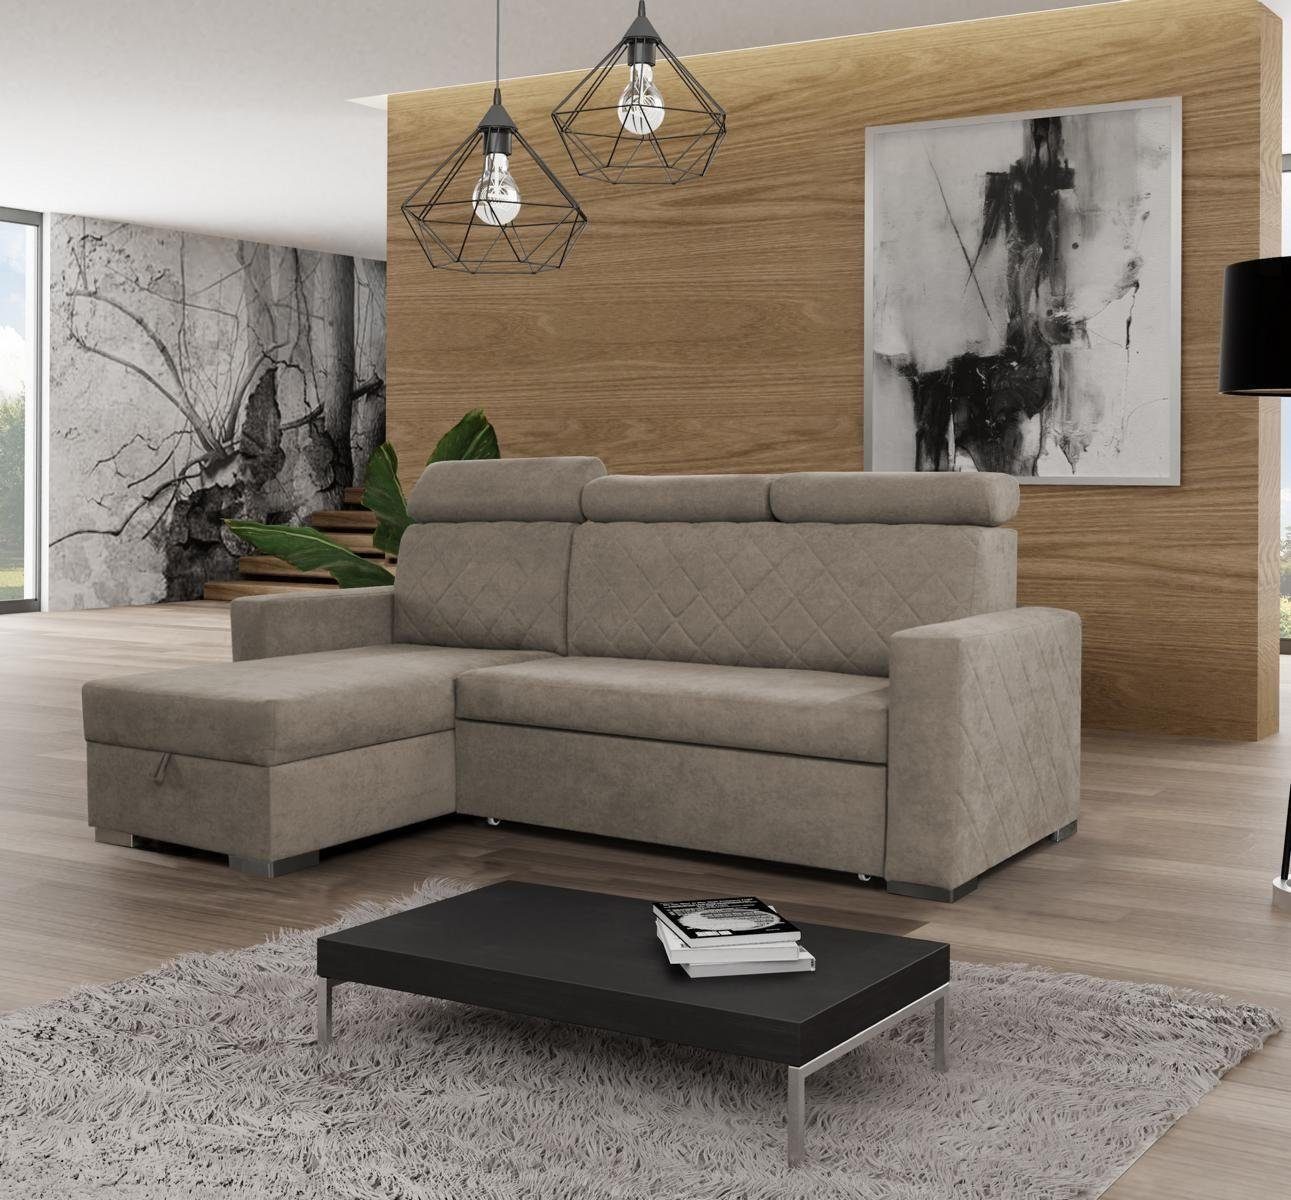 JVmoebel Modern Braun Ecksofa Textil Eck Lounge Wohnlandschaft Couch Ecksofa, Design L-form